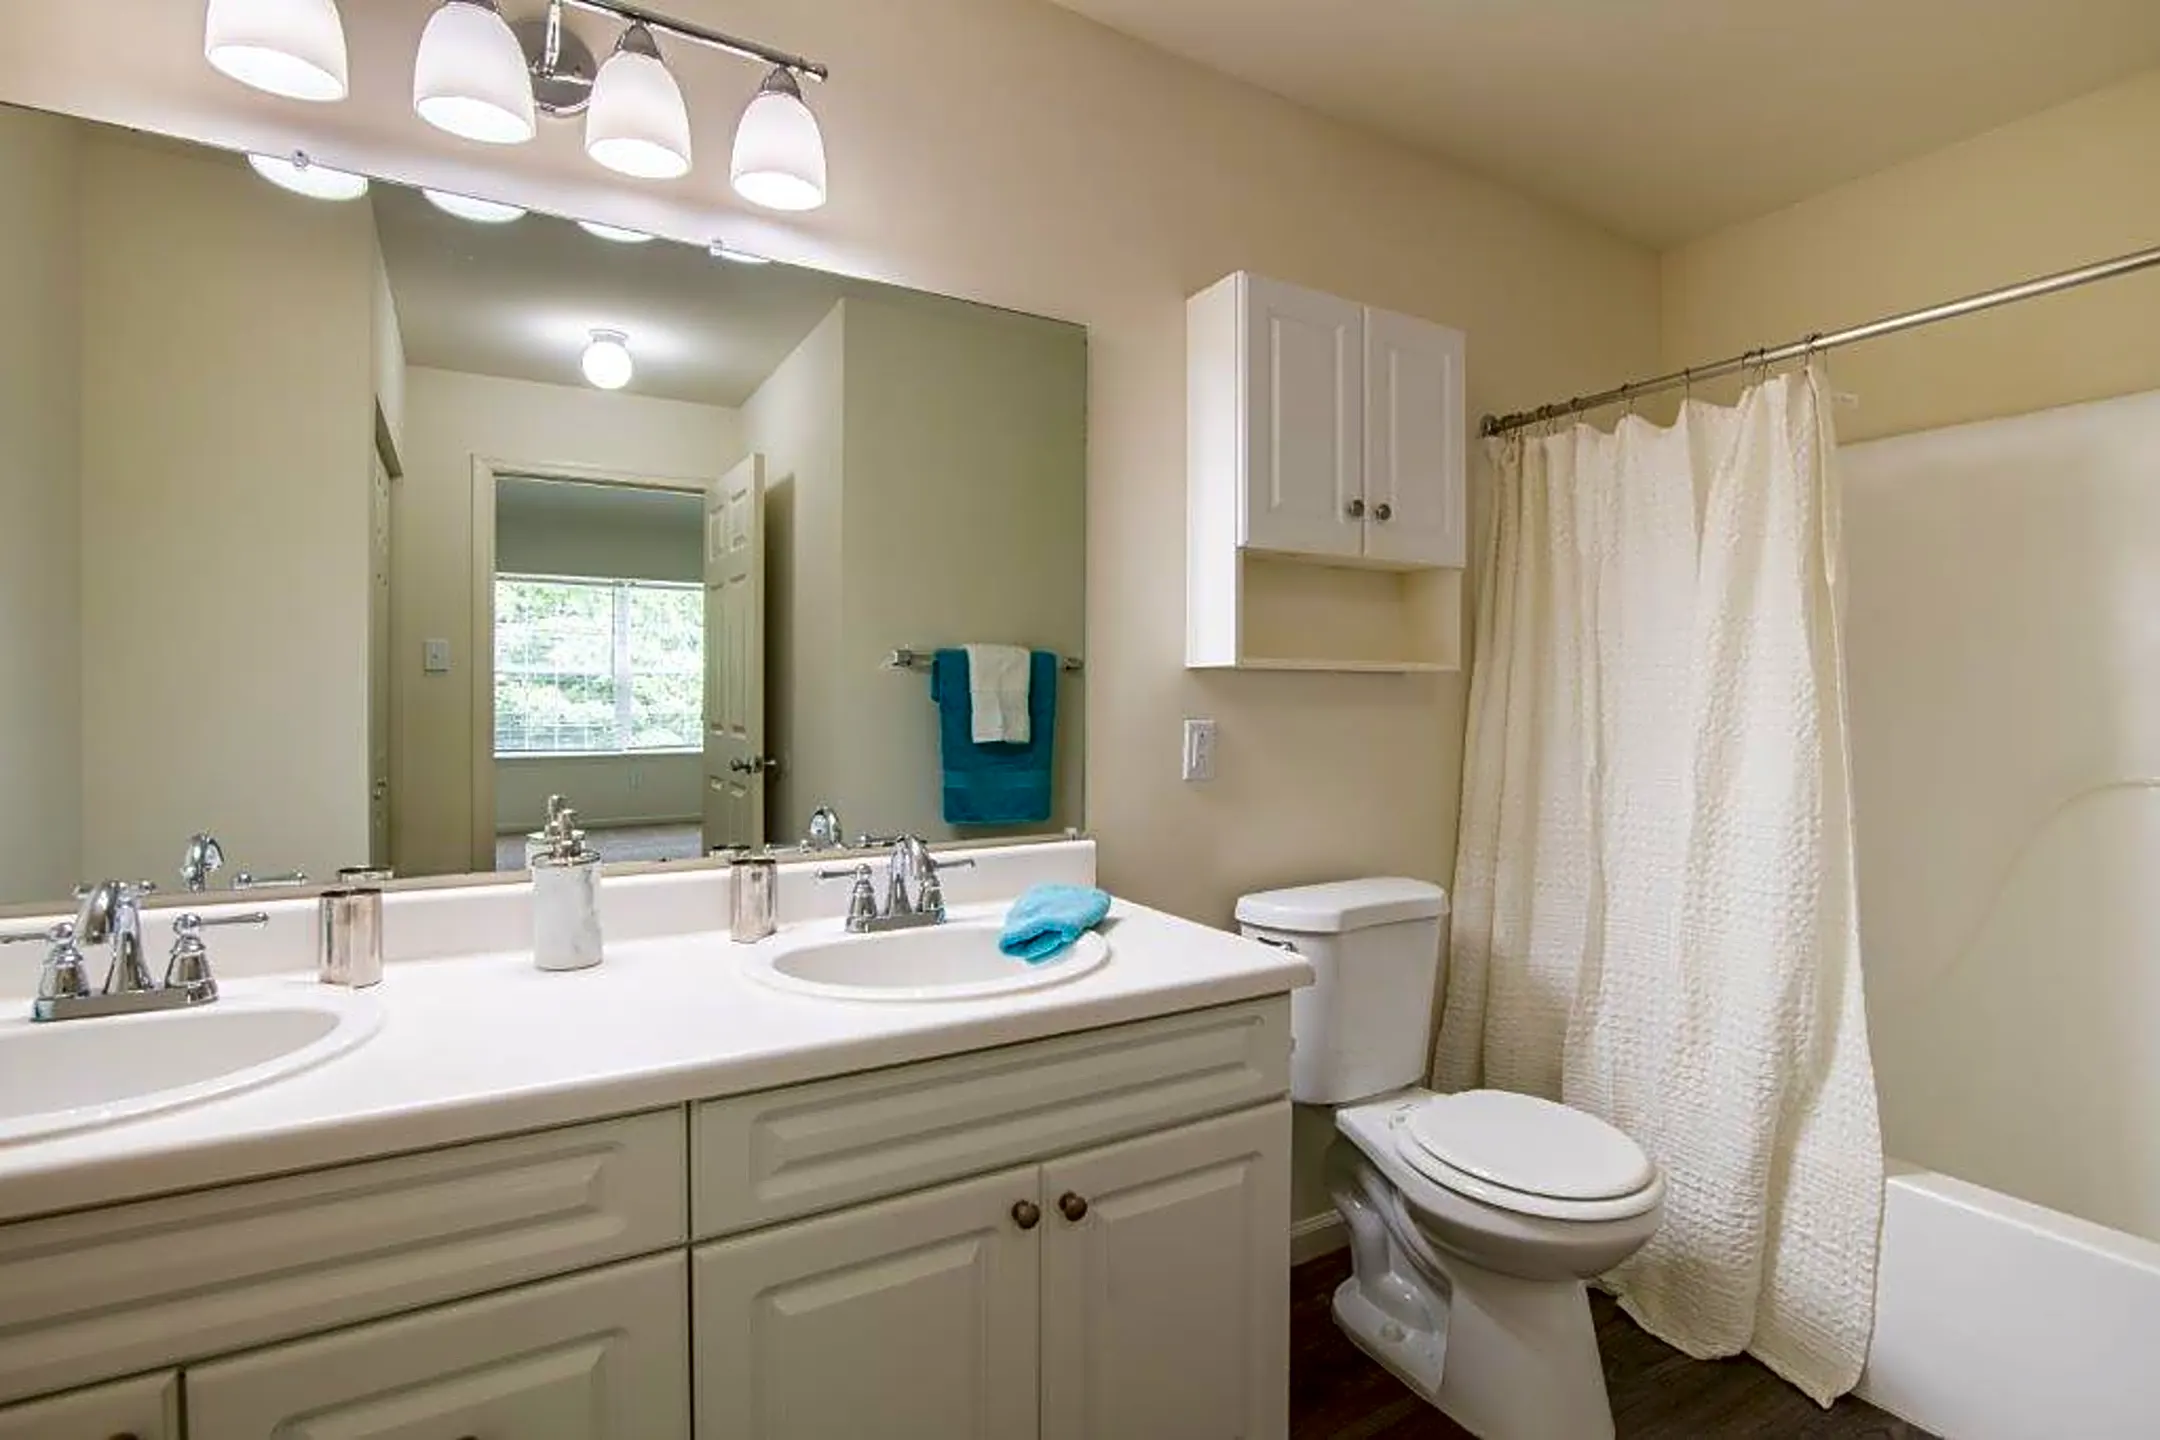 Bathroom - Abrams Run Apartment Homes - King of Prussia, PA